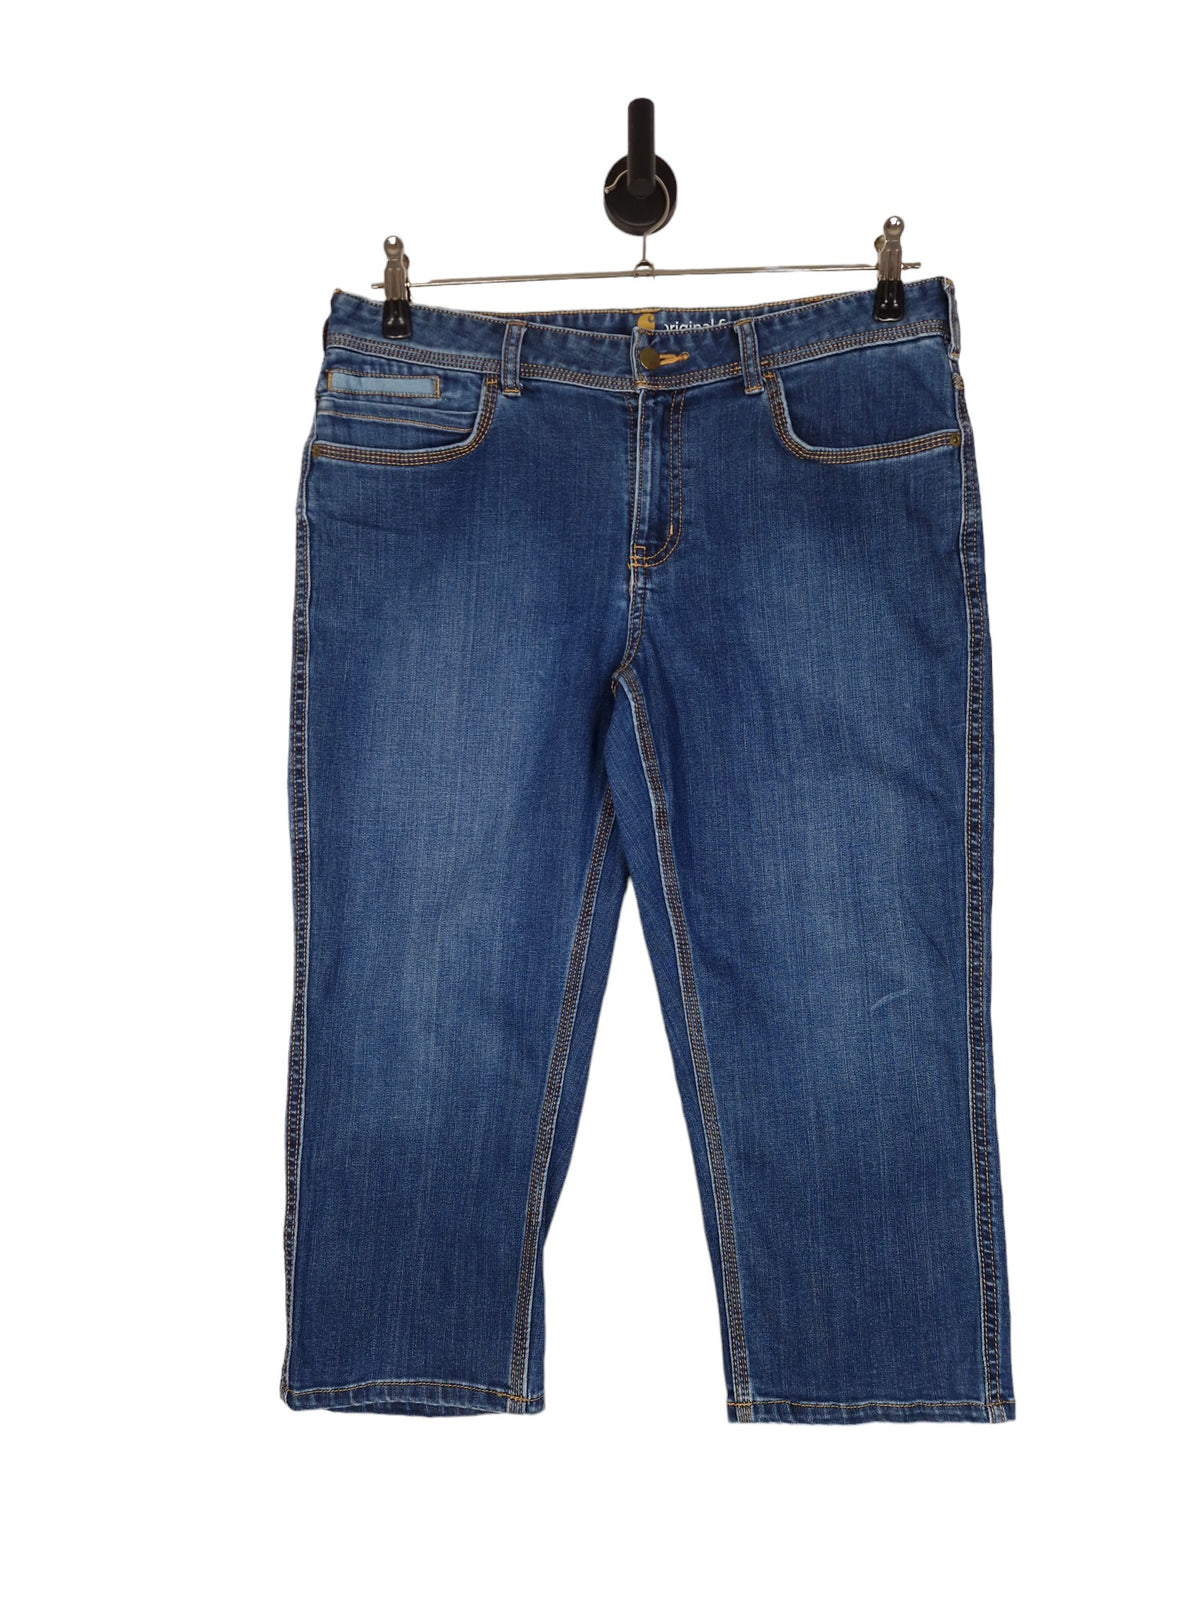 Carhartt Capri Jeans - Size W34 UK 14